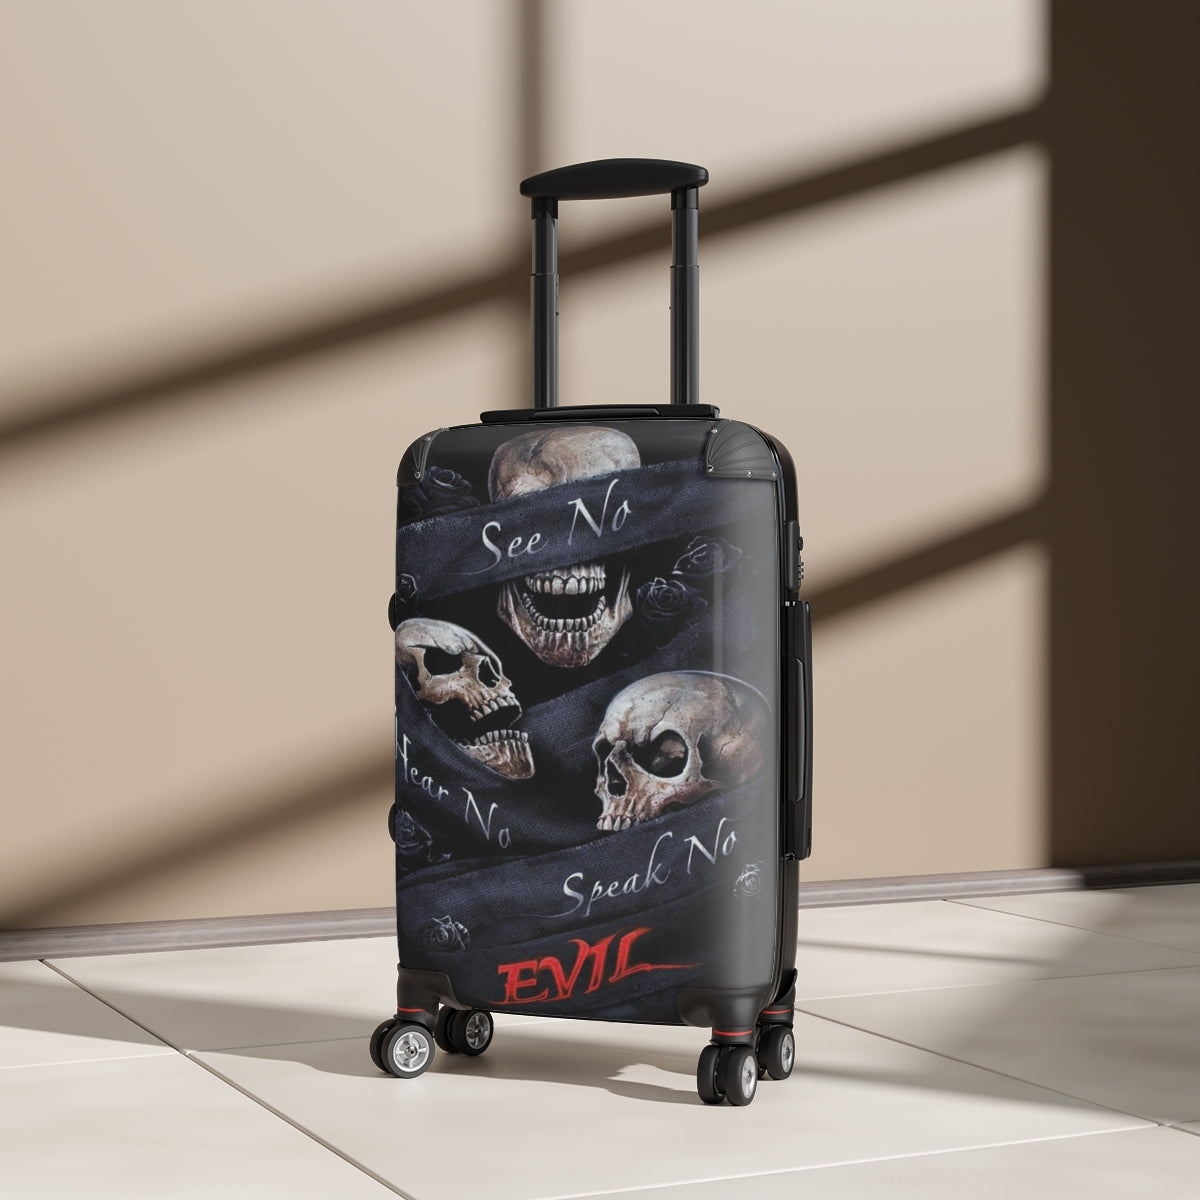 No see no hear no speak evils skull Suitcases Luggage